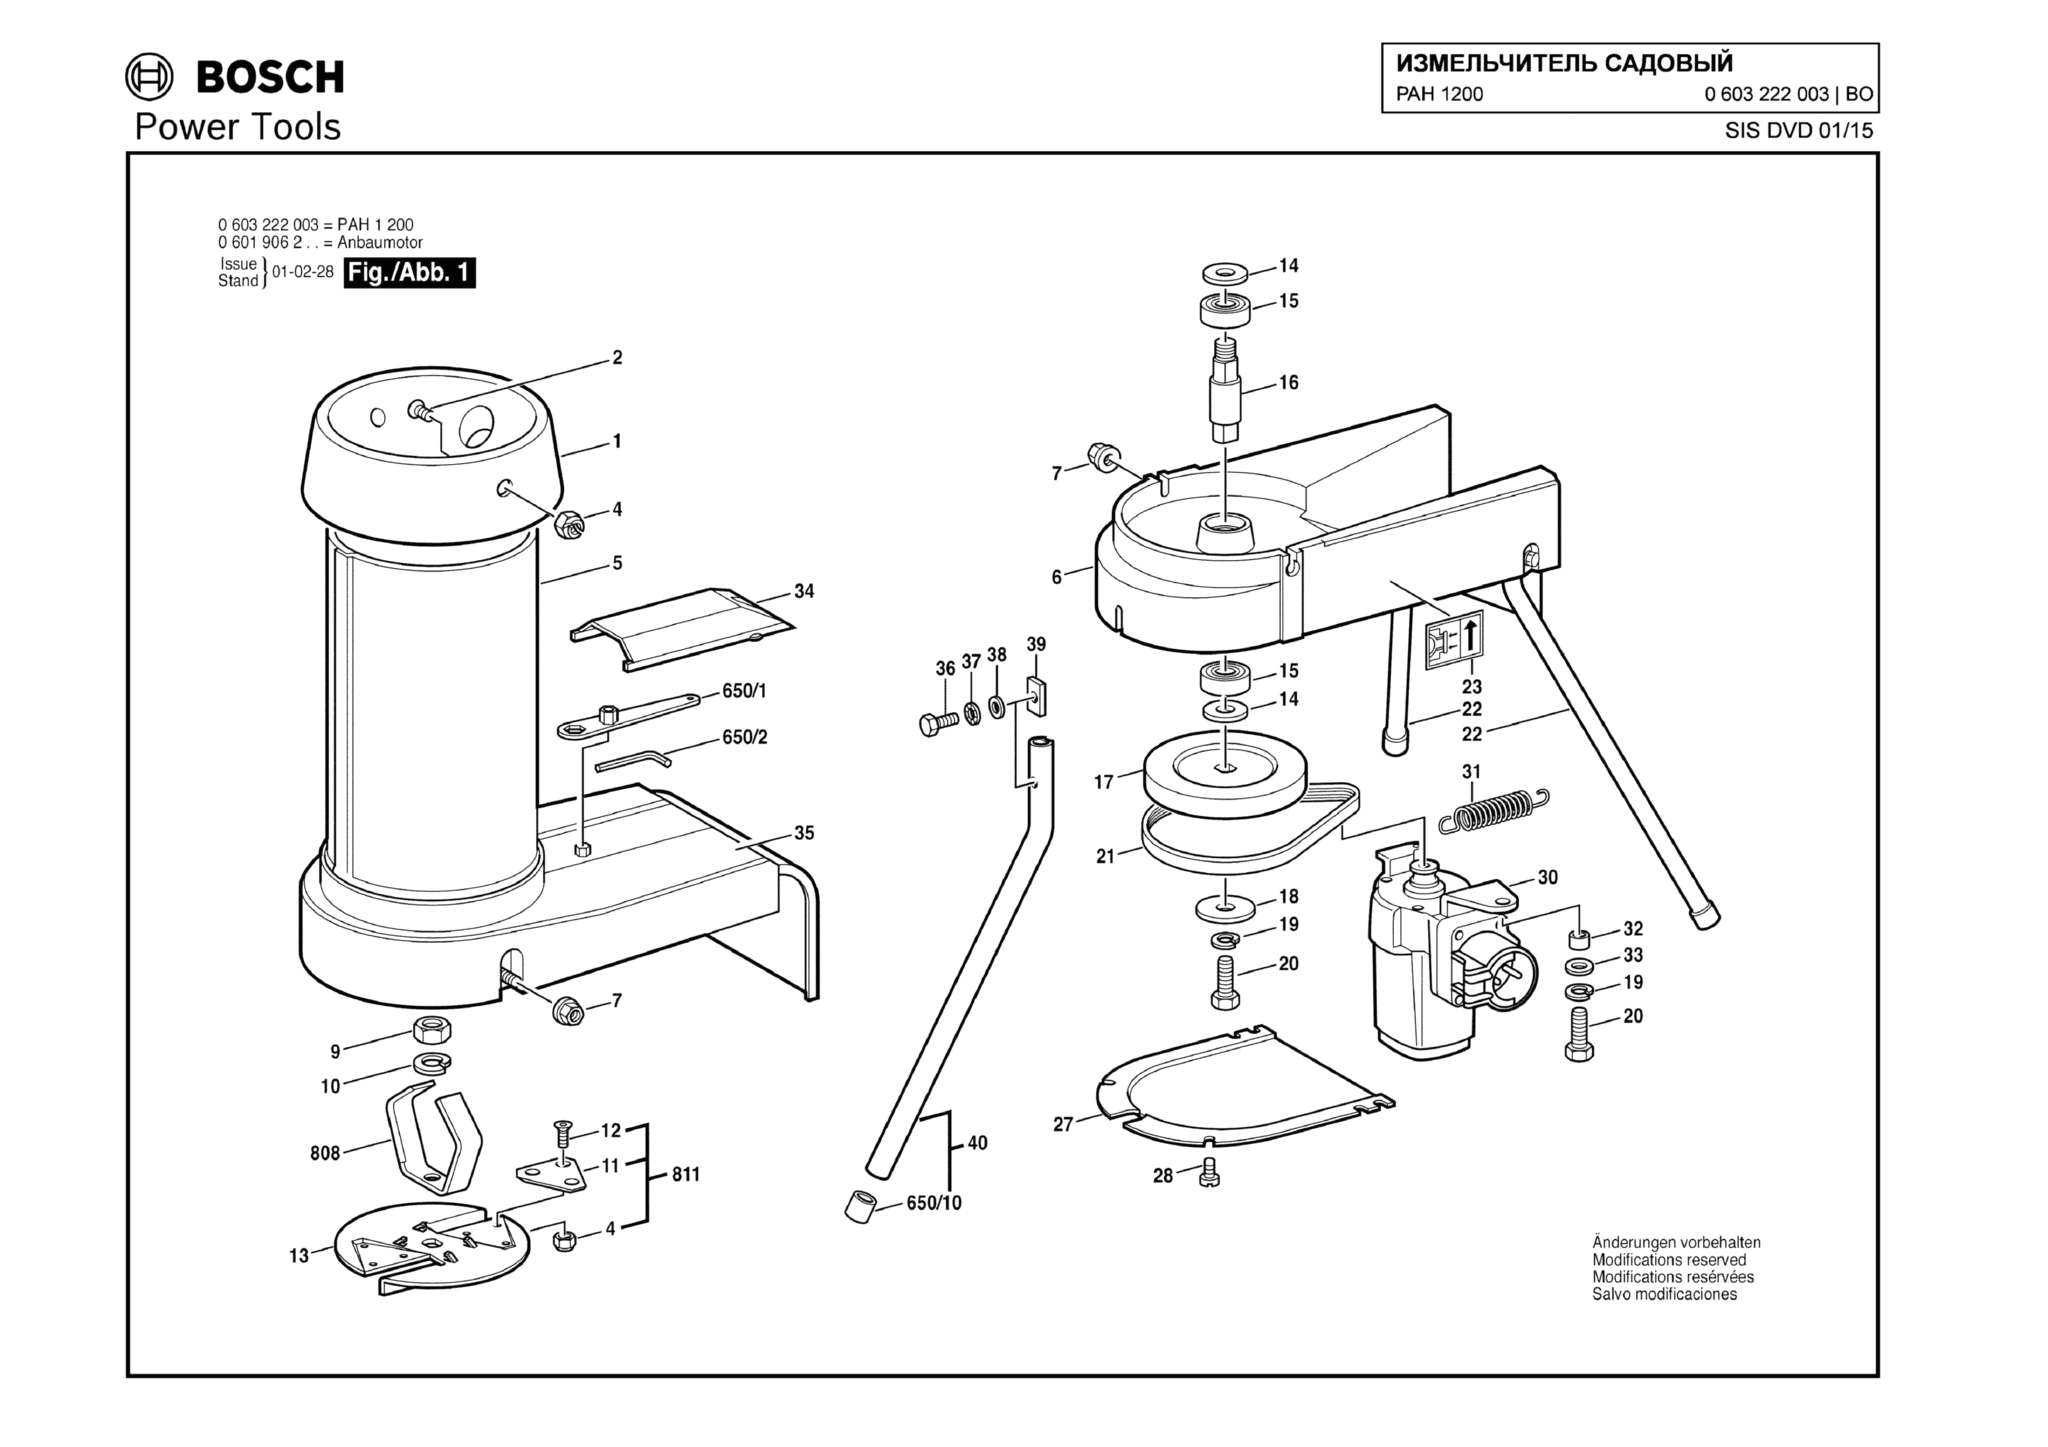 Запчасти, схема и деталировка Bosch PAH 1200 (ТИП 0603222003)